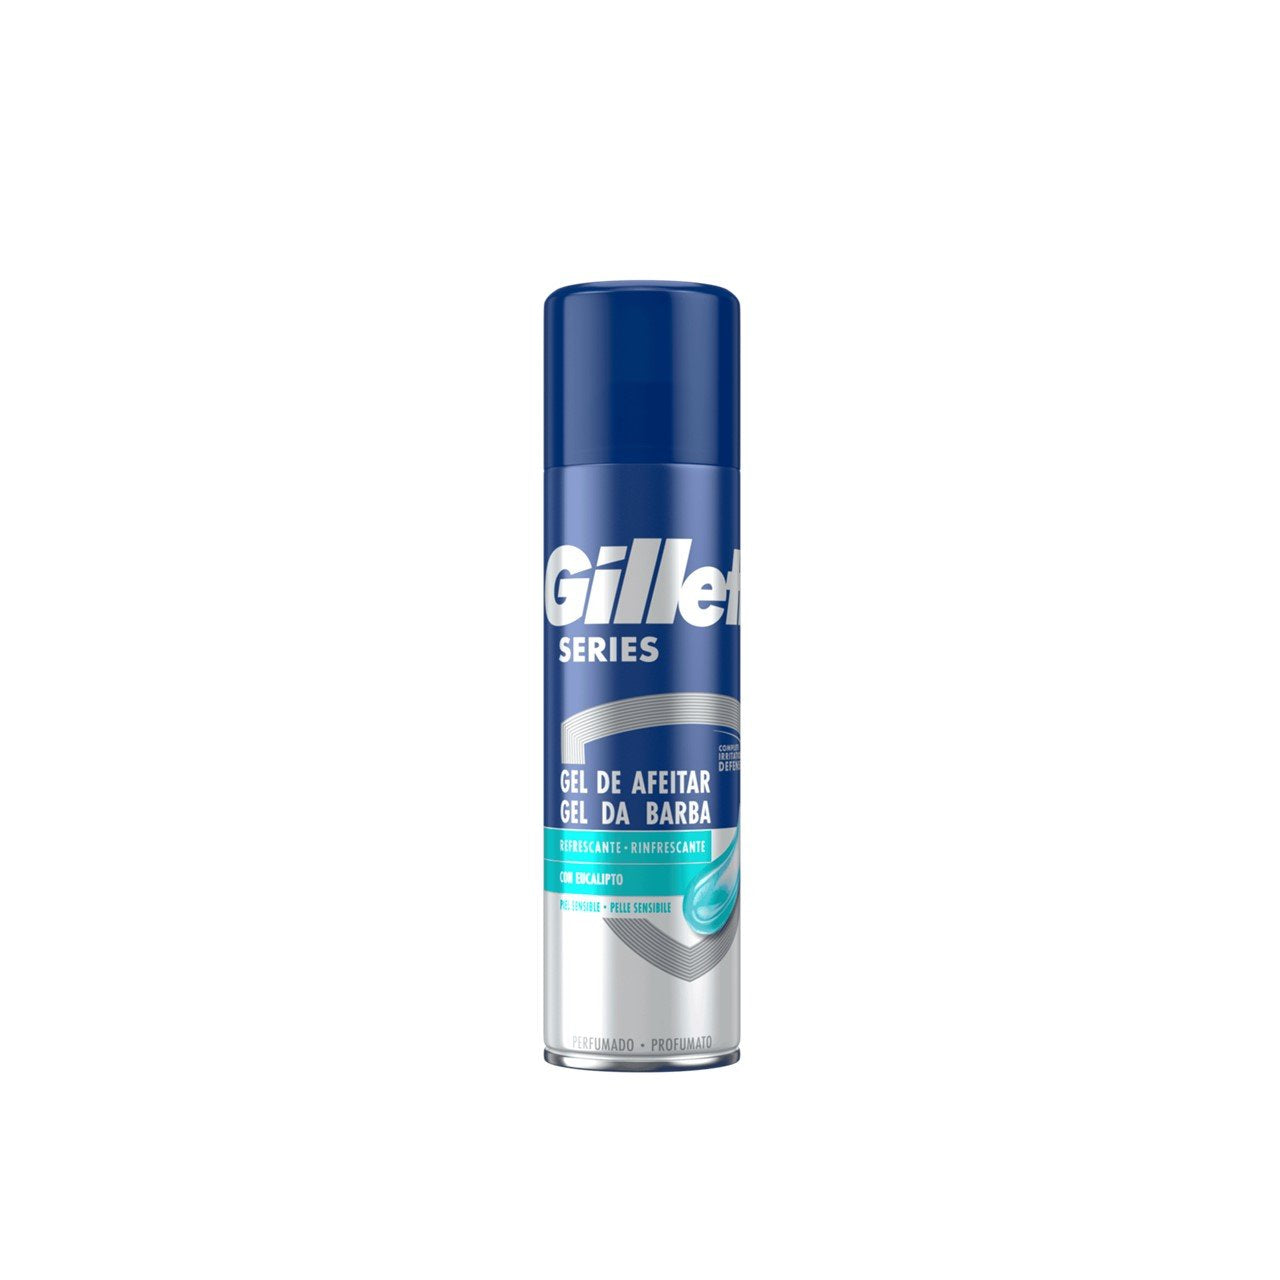 Gillette Series Gel de barbear refrescante com eucalipto 200ml